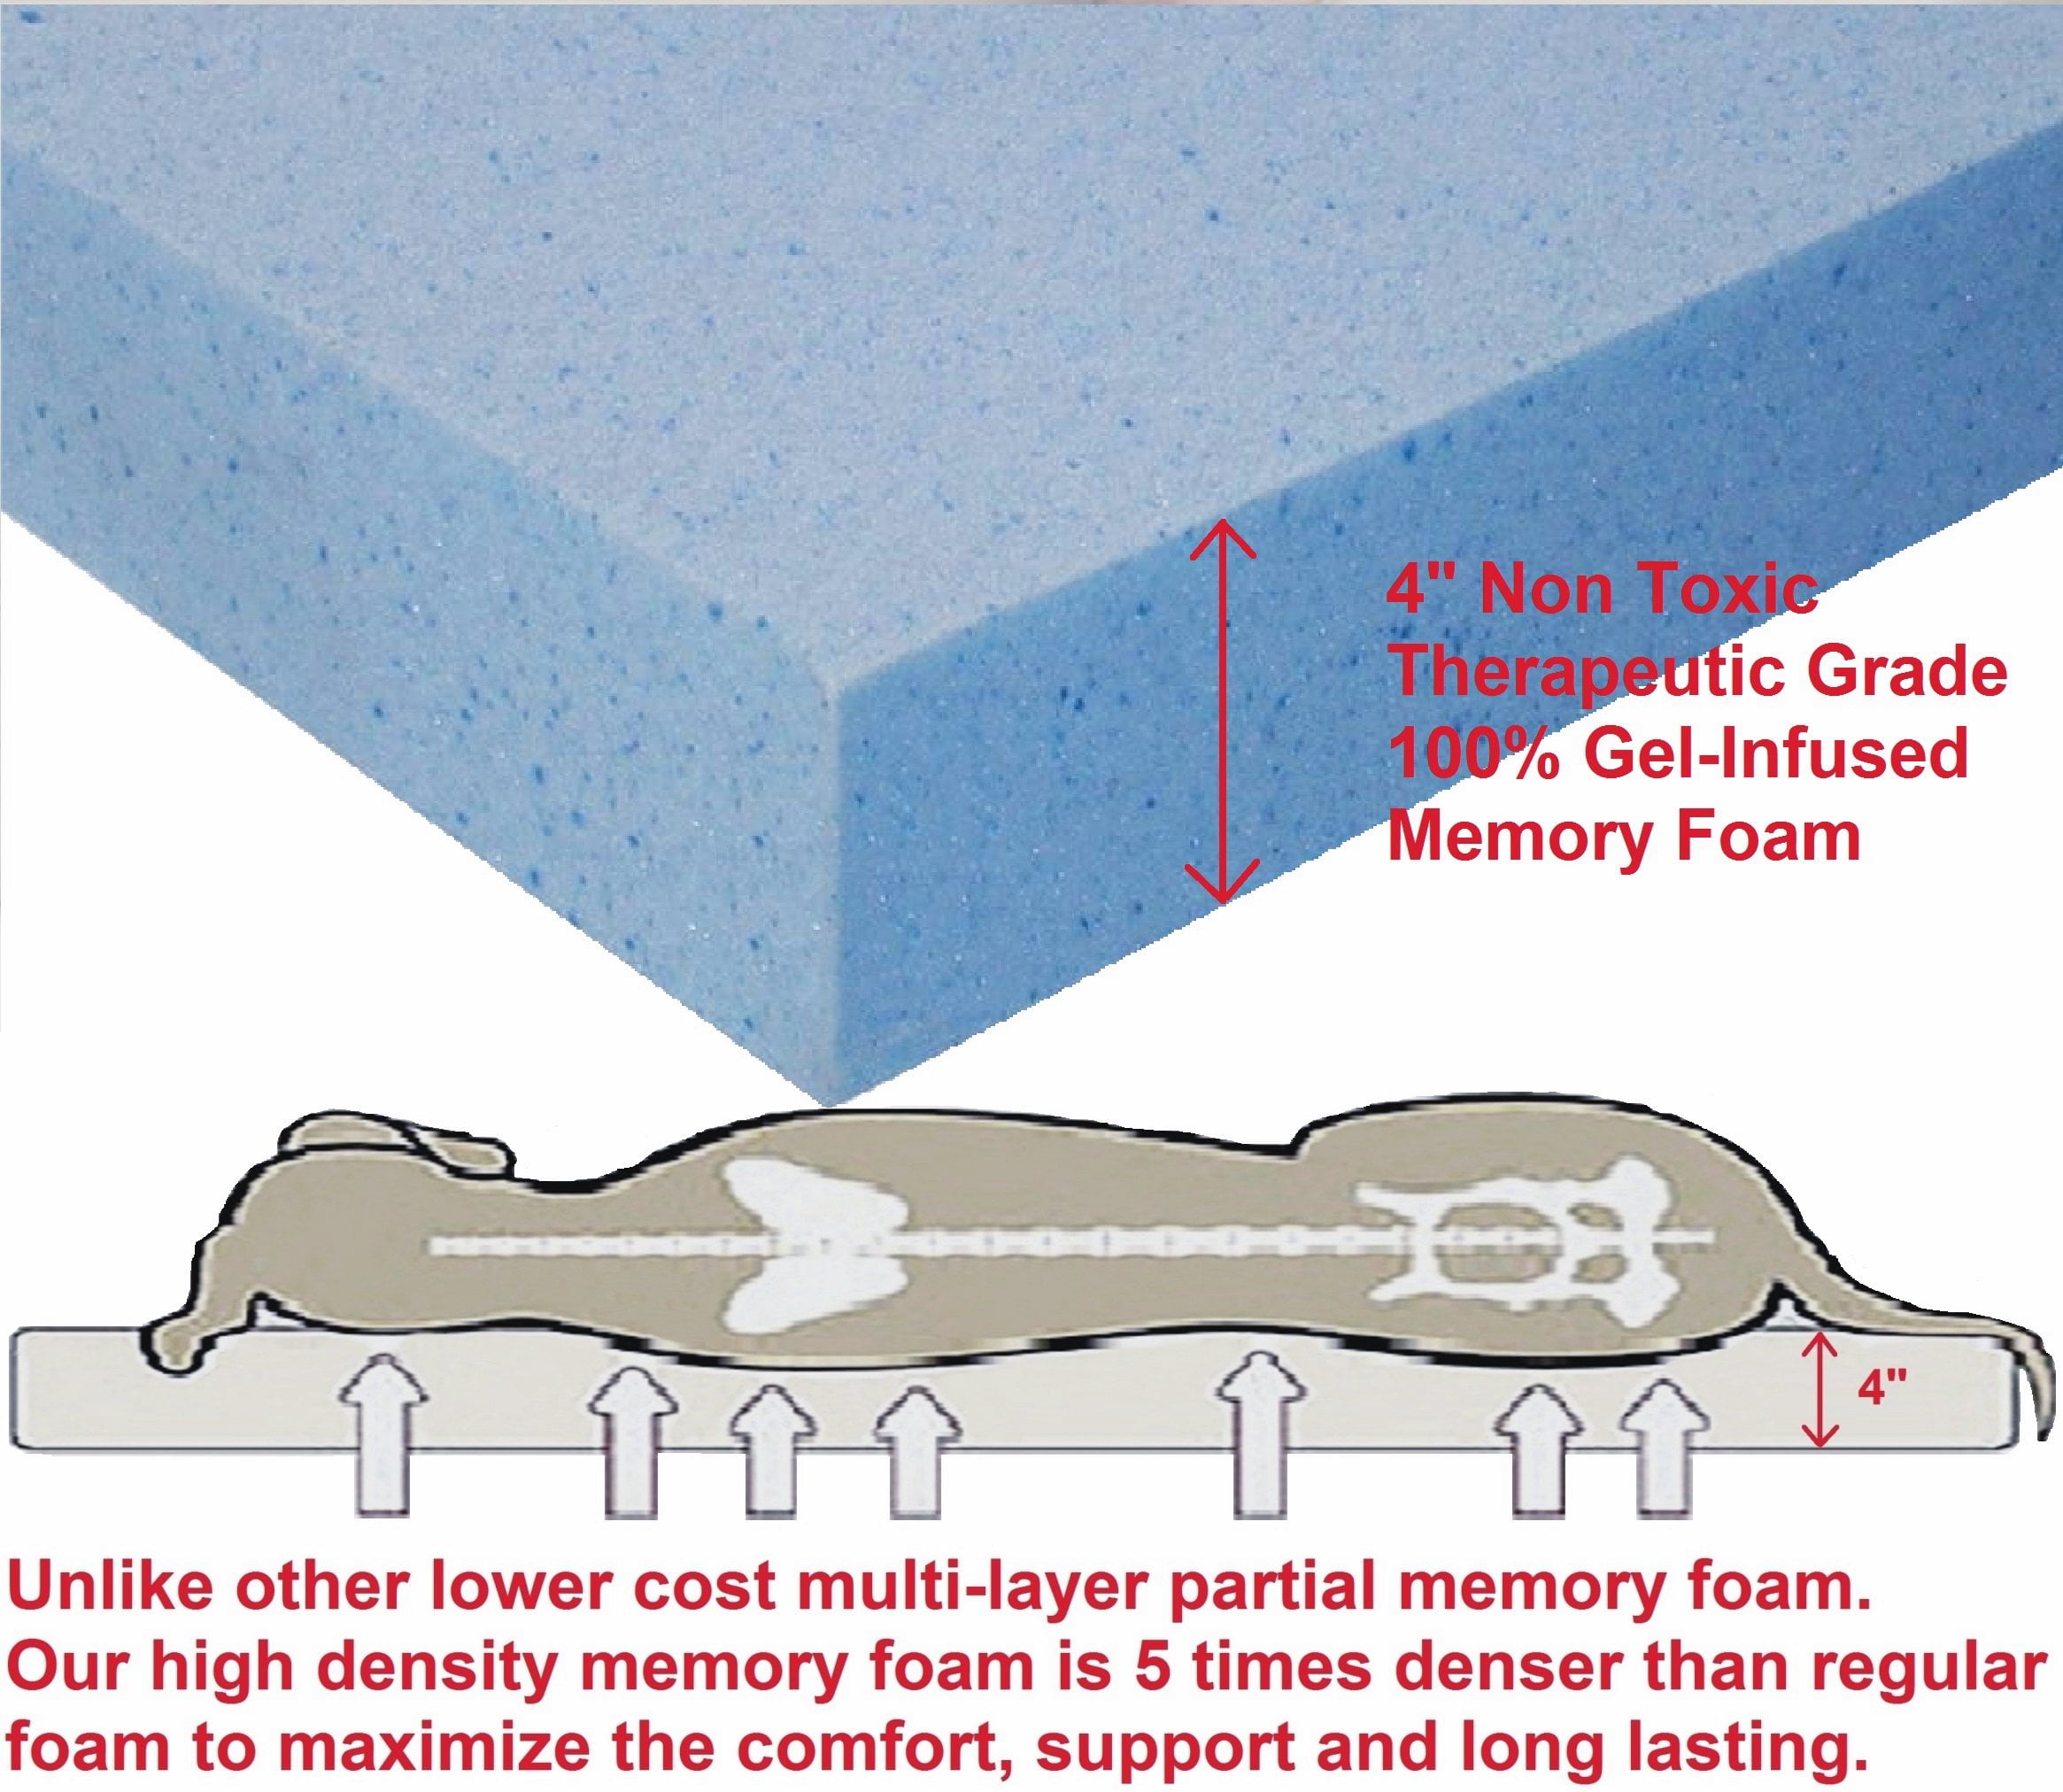 Jumbo Orthopedic Waterproof Memory Foam Dog Bed for Extra Large